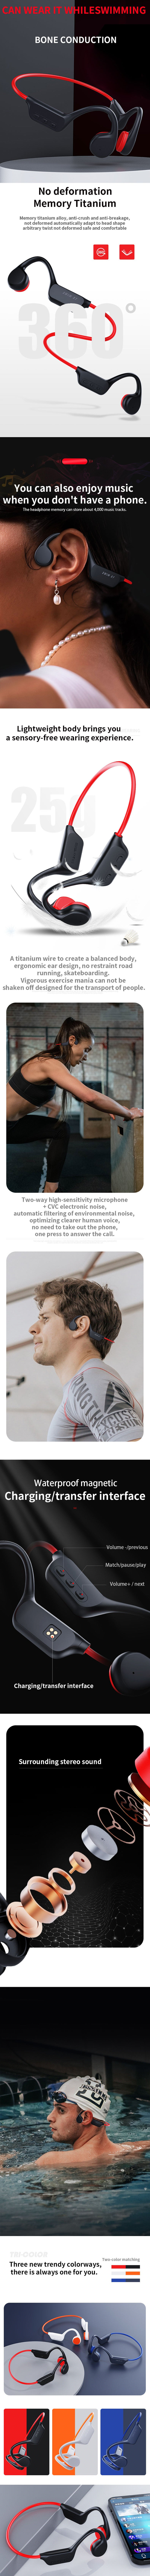 X7 bone conduction headsets earphone headphone details